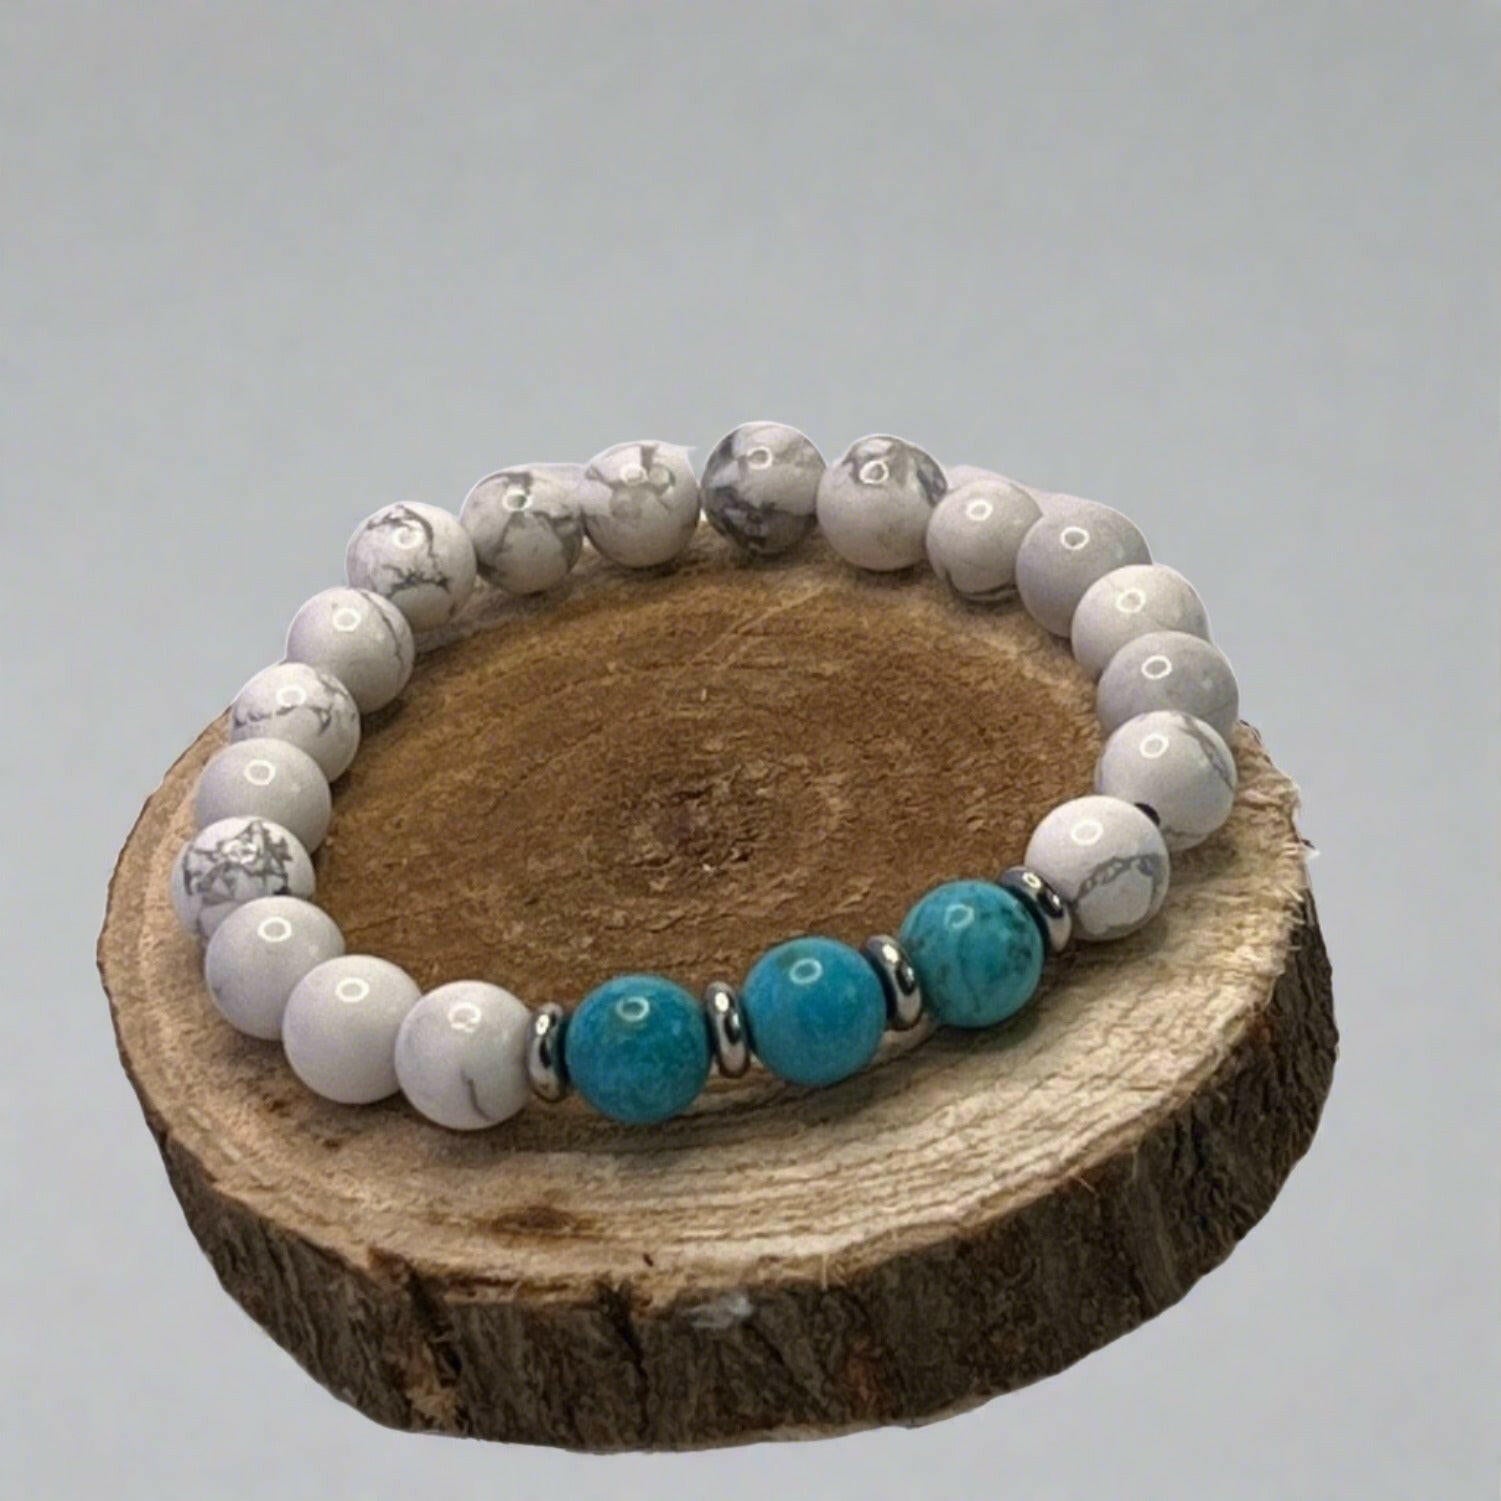 Bec Sue Jewelry Shop bracelets 6 / Howlite/Turquoise / white/blue Handcrafted Gemstone Chakra Bracelet Tags 507